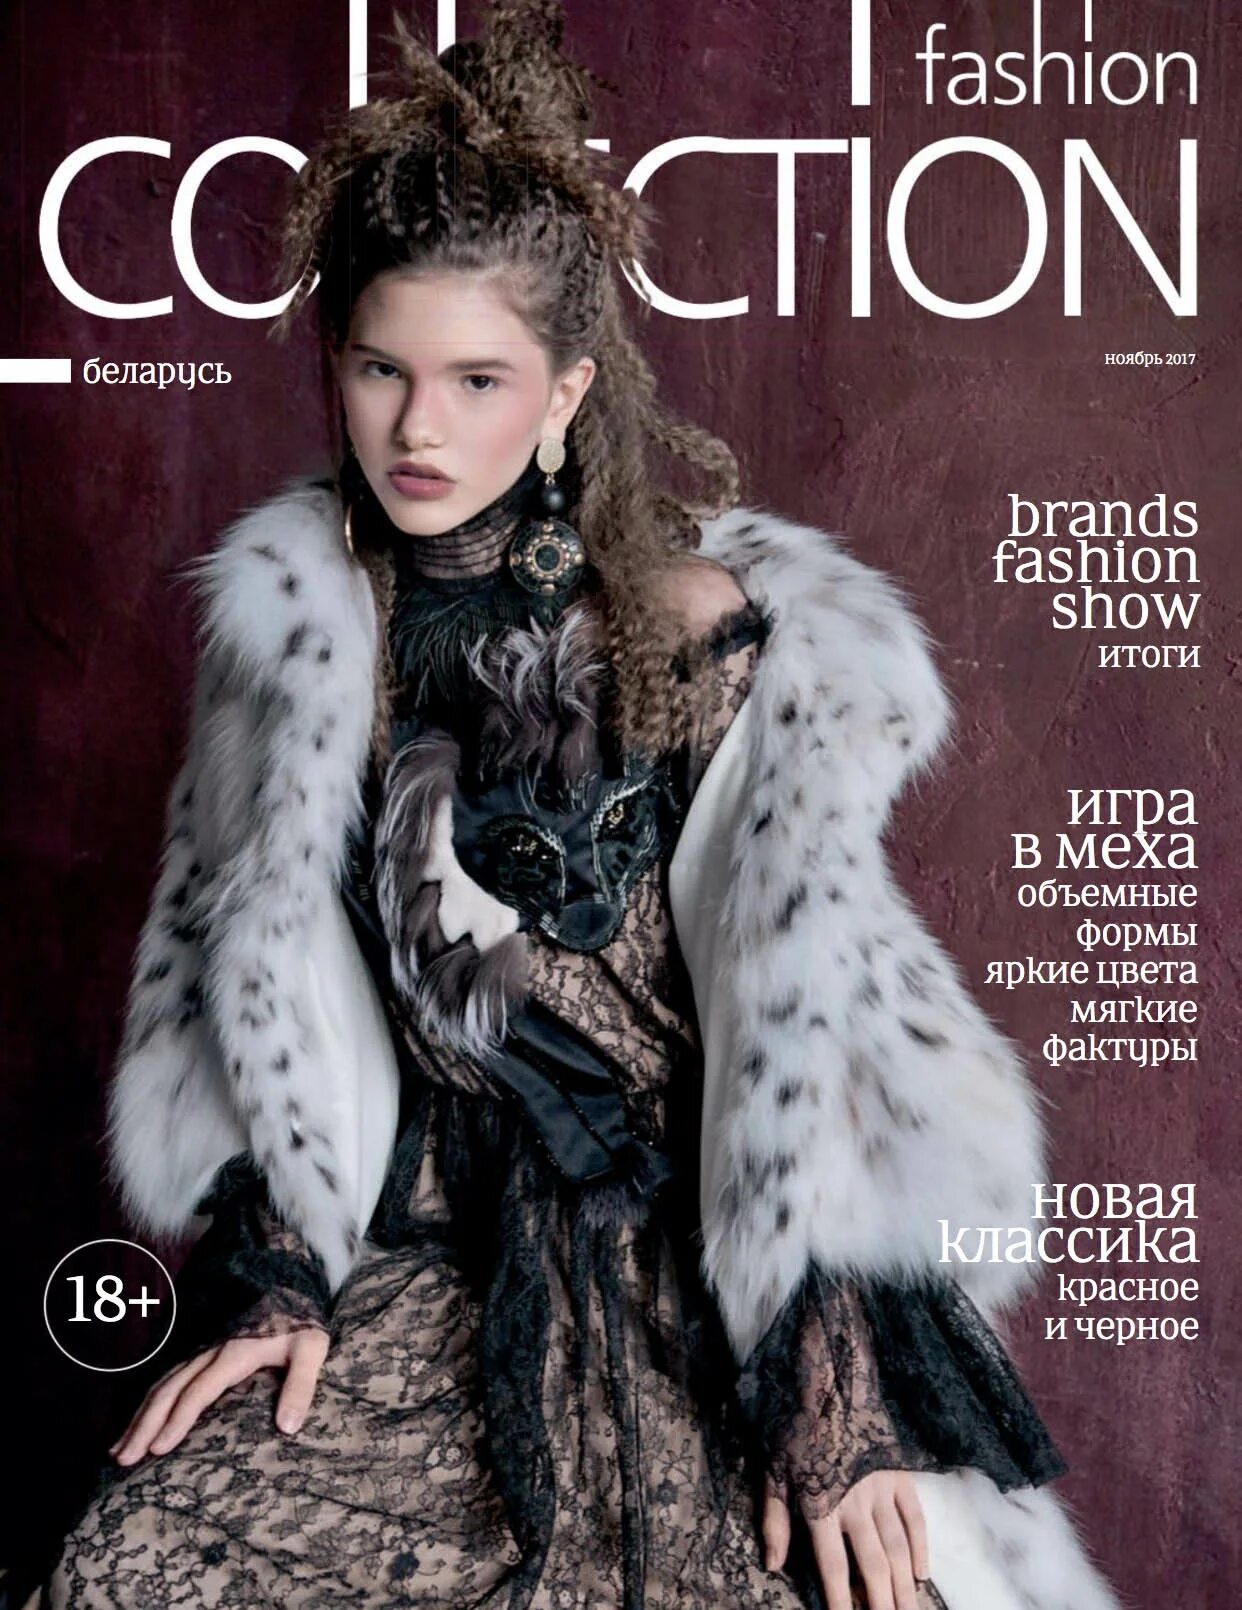 Collection журнал. Модные журналы. Журнал Fashion collection. Обложка фэшн журнала. Журнал моды Fashion collection.